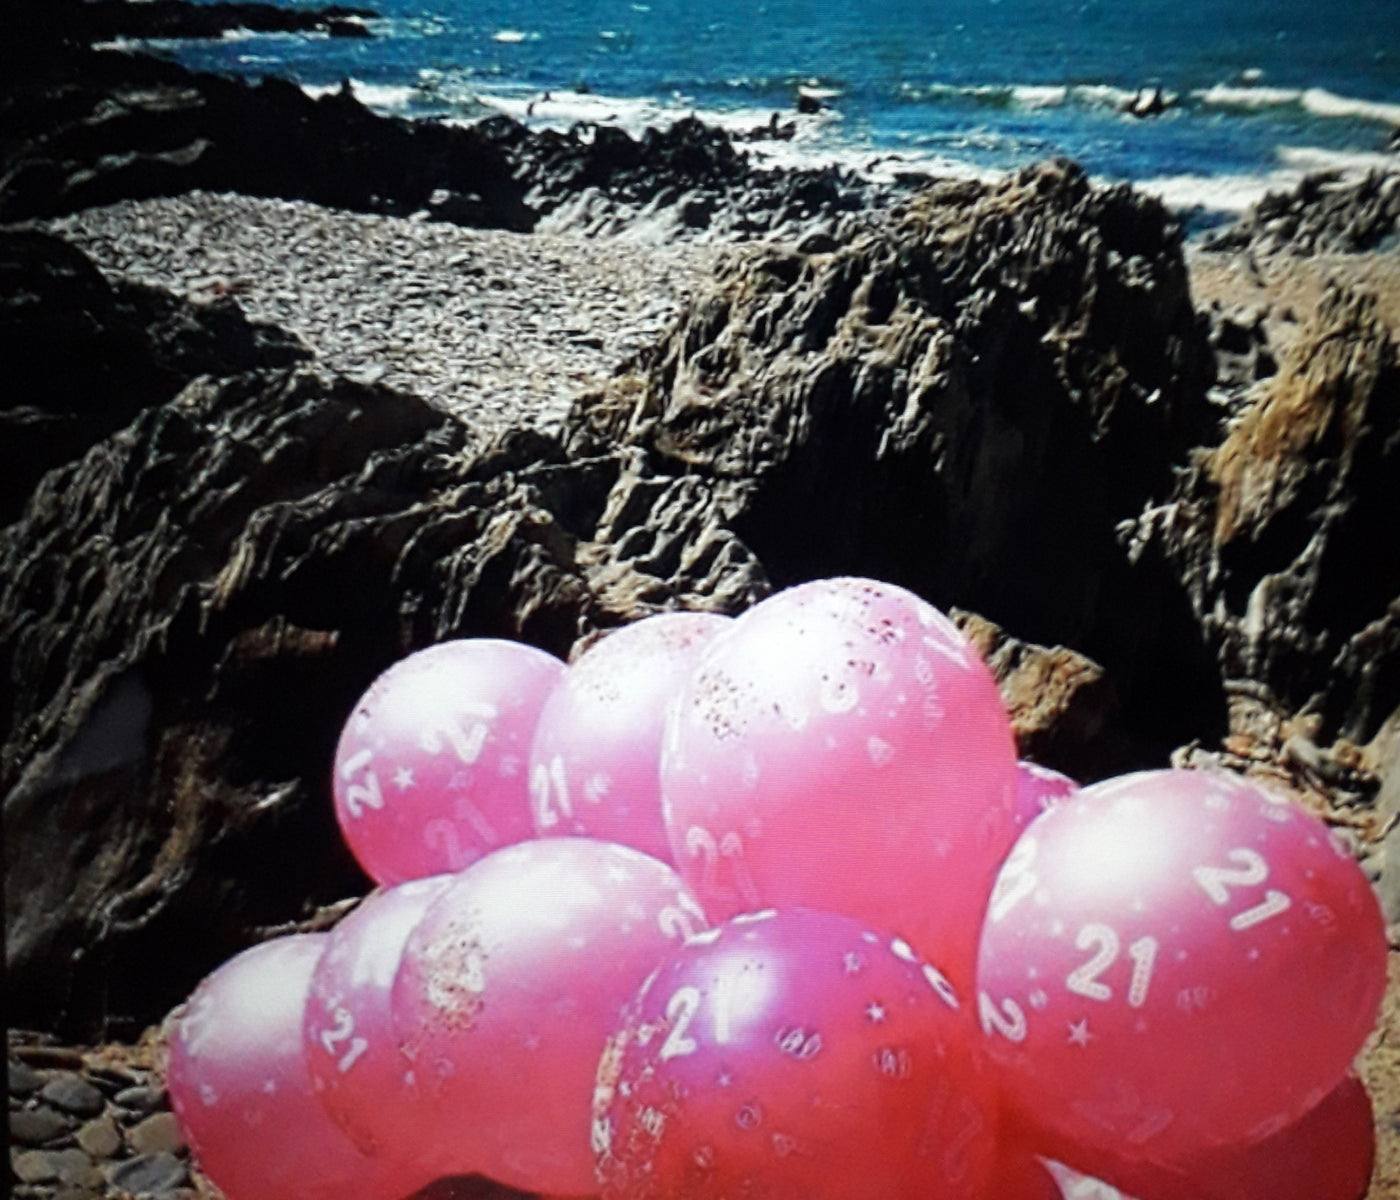 21st birthday celebration  balloons blown on to the beach. 